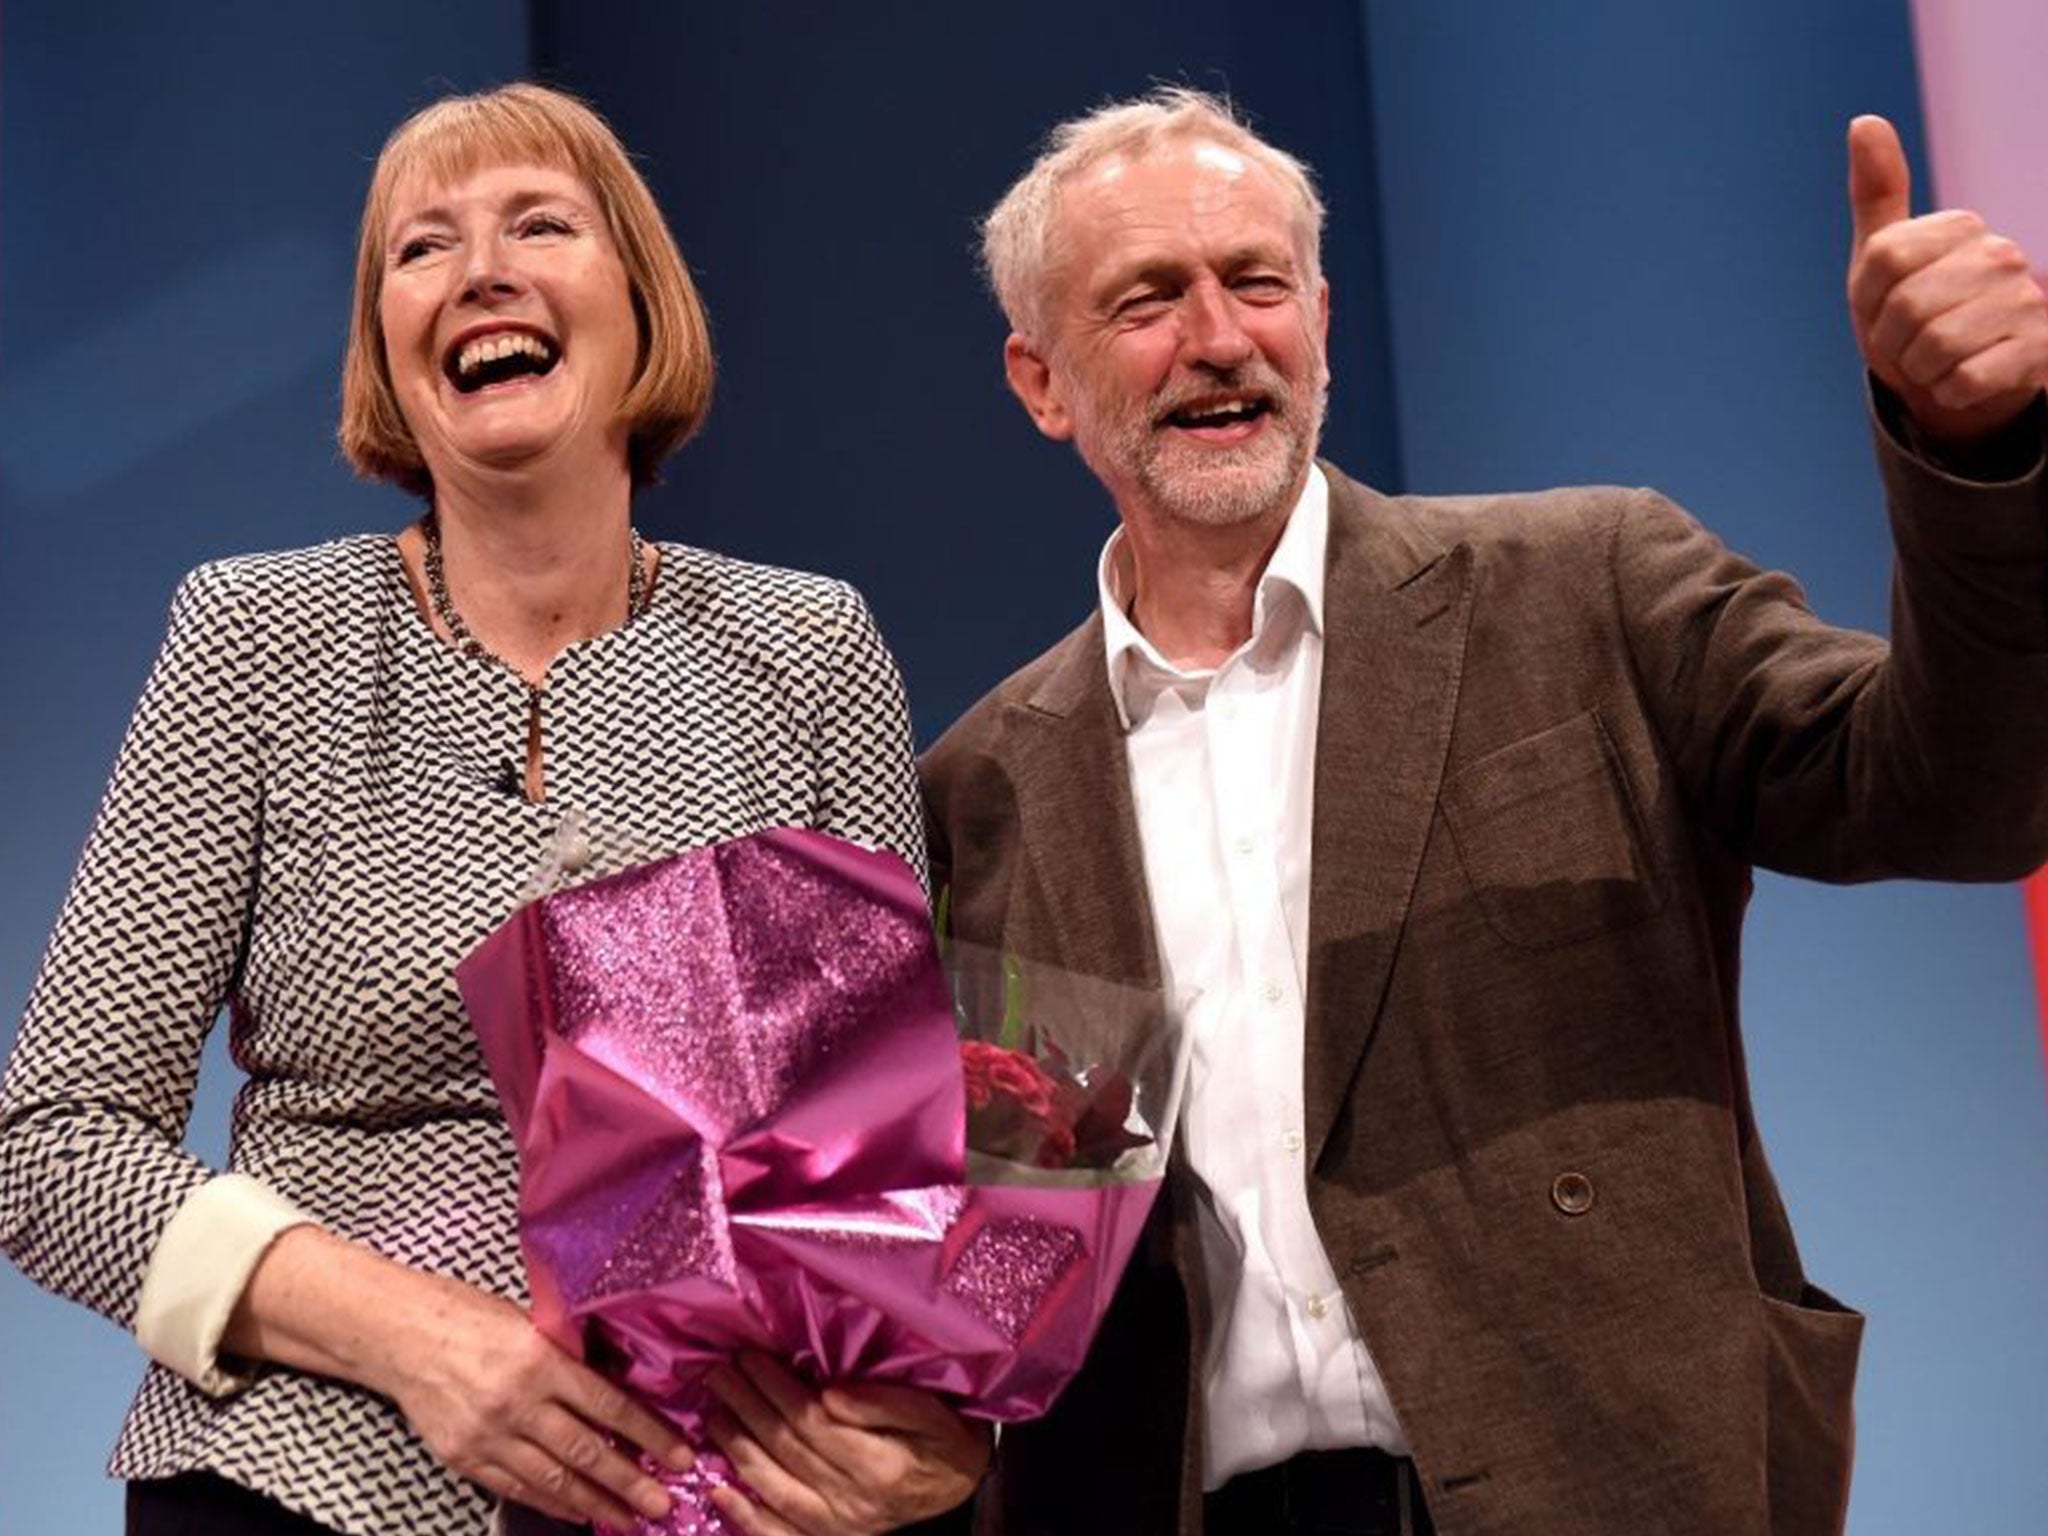 Harriet Harman with Jeremy Corbyn following the Labour leadership race in 2015